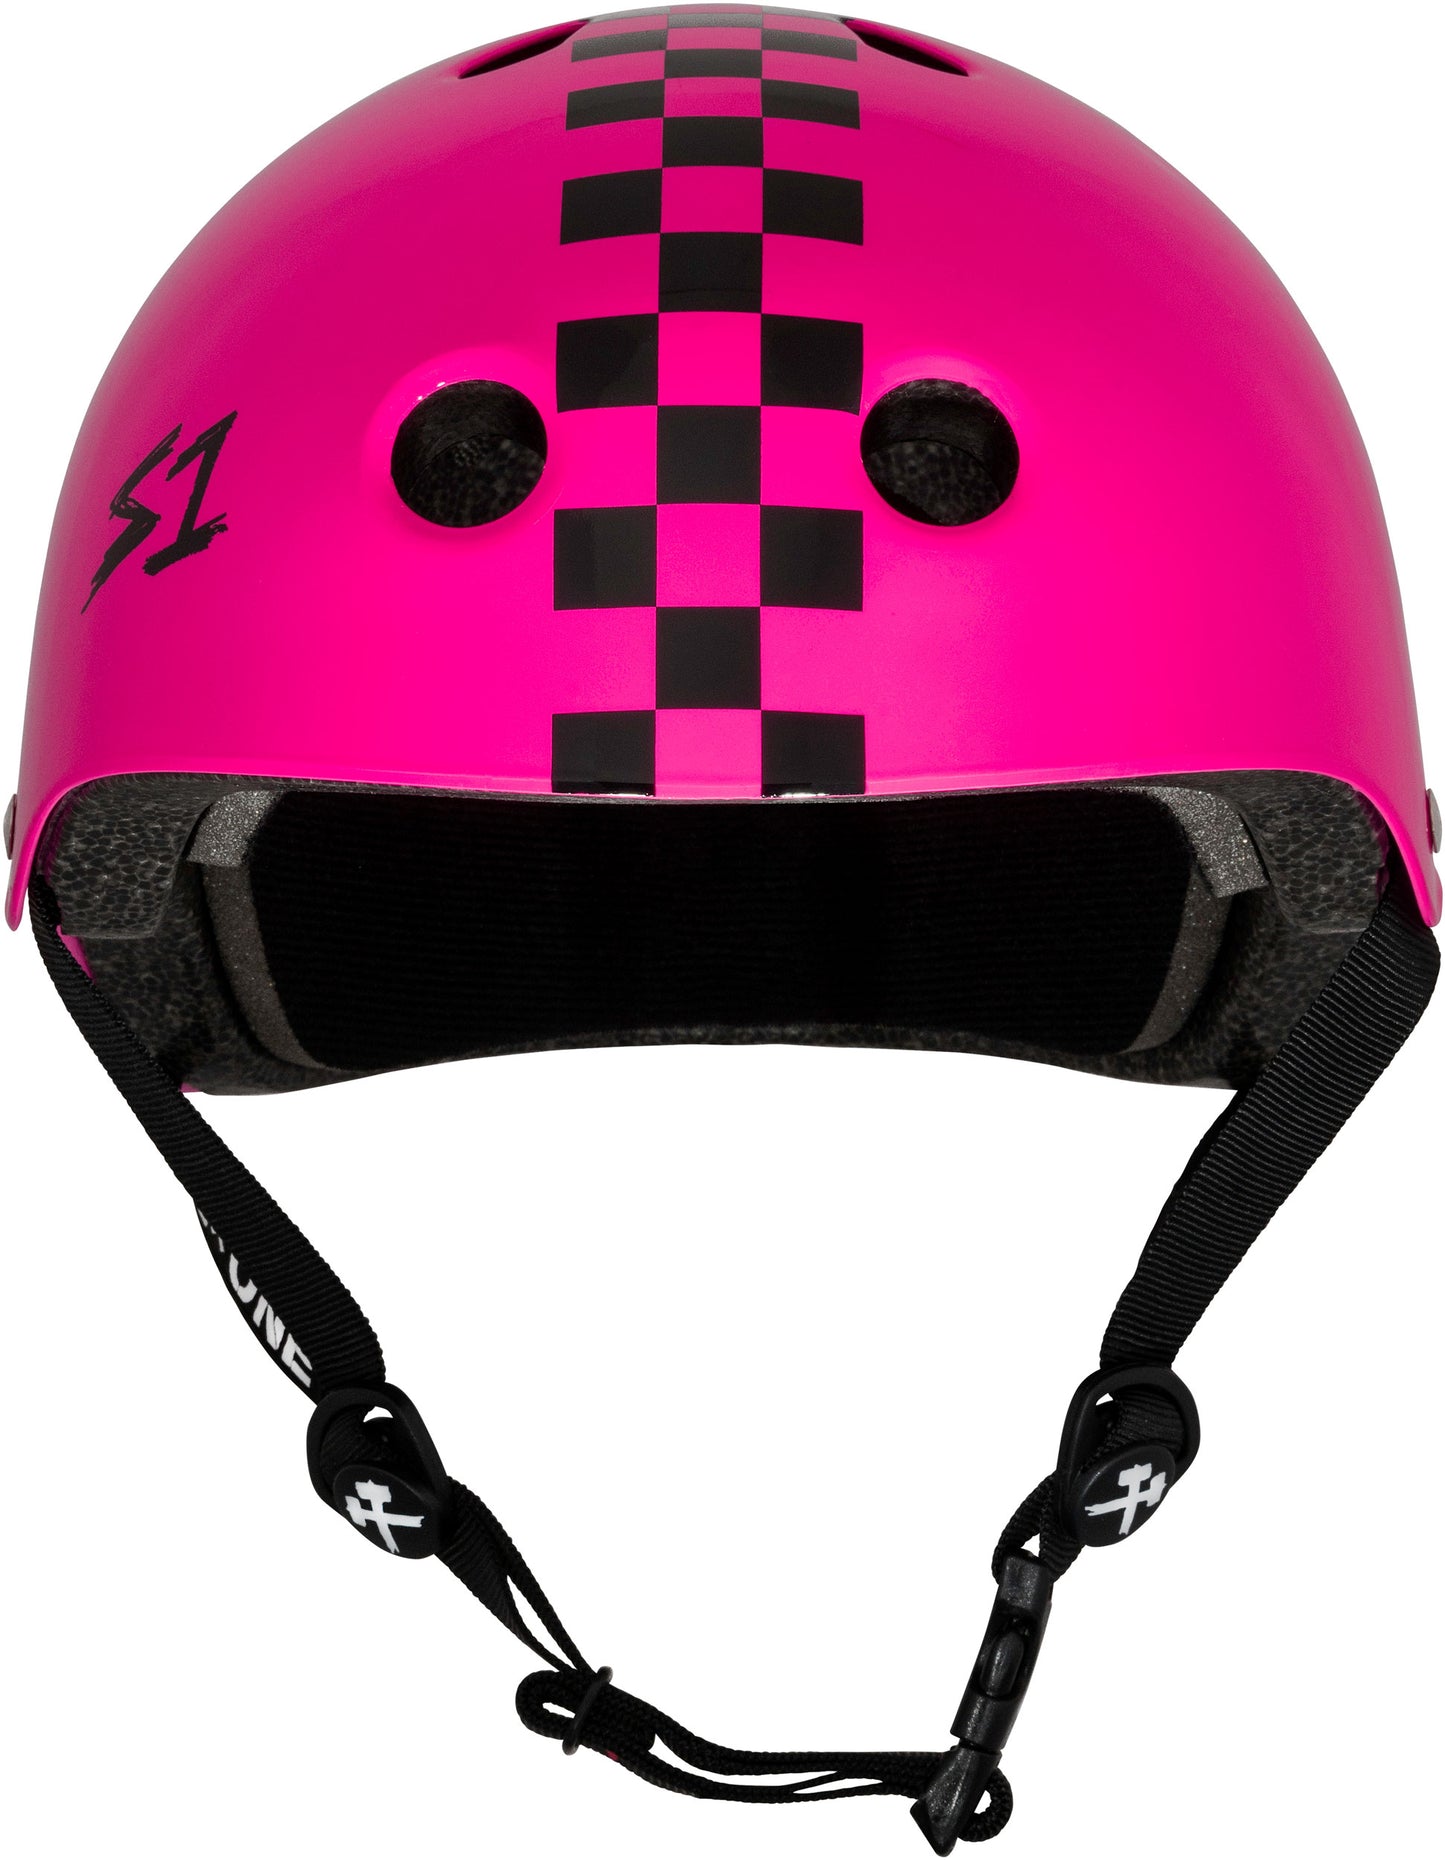 S1 Lifer Helmet - Pink Gloss w/ Black Checkers